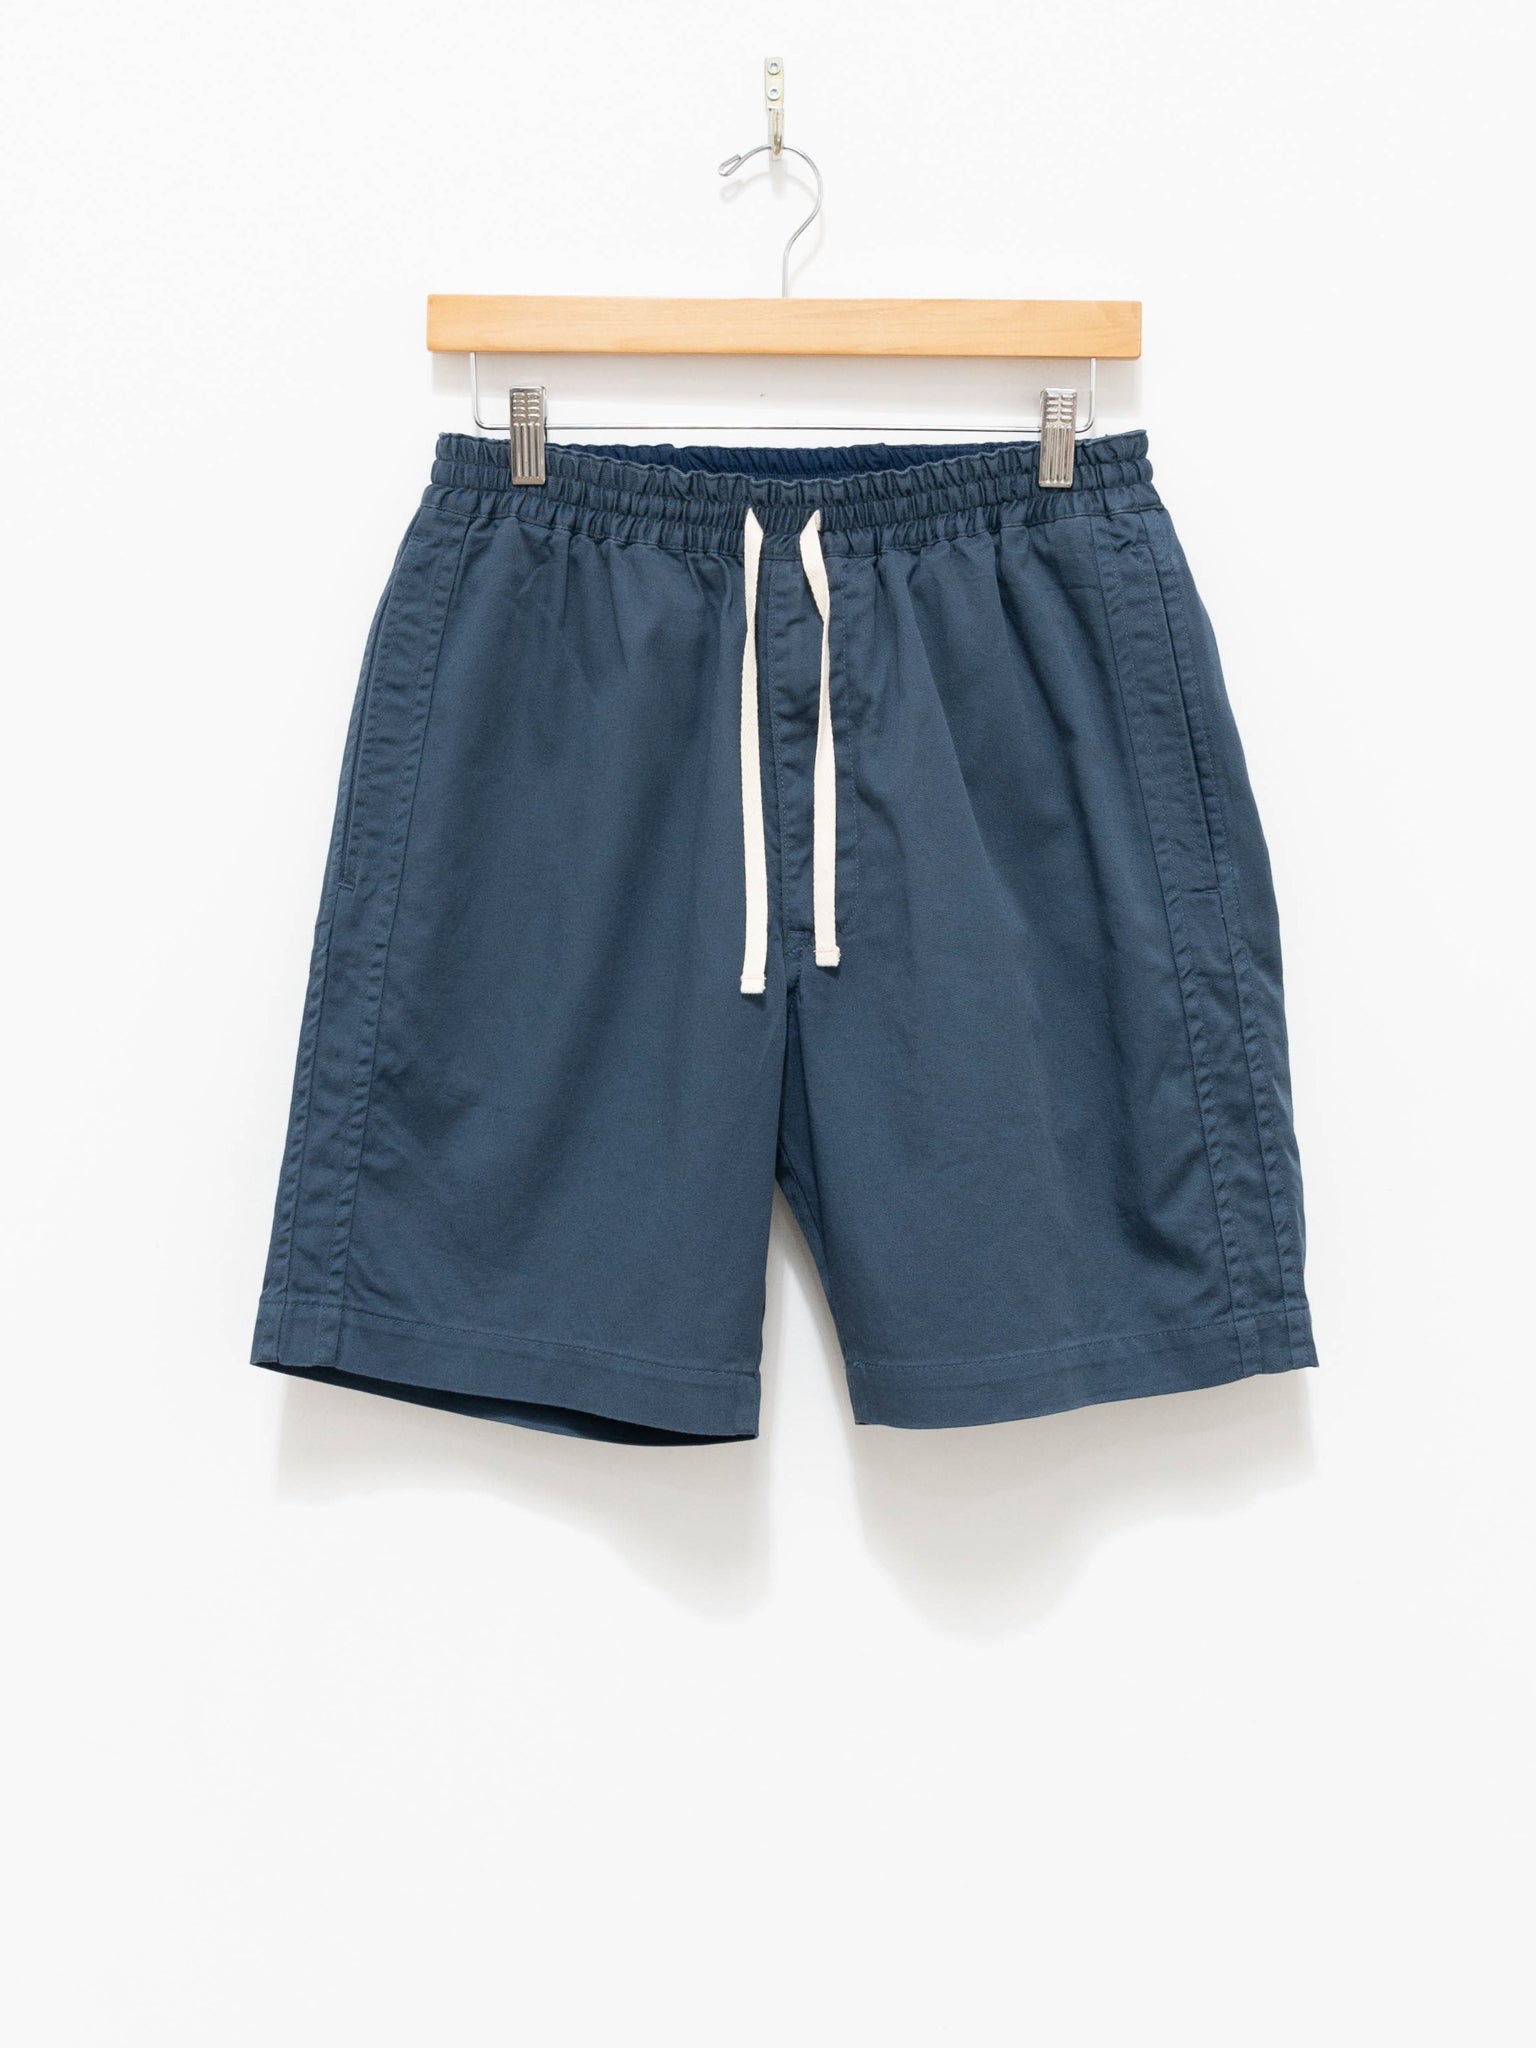 Namu Shop - Fujito Line Easy Shorts - Smokey Blue